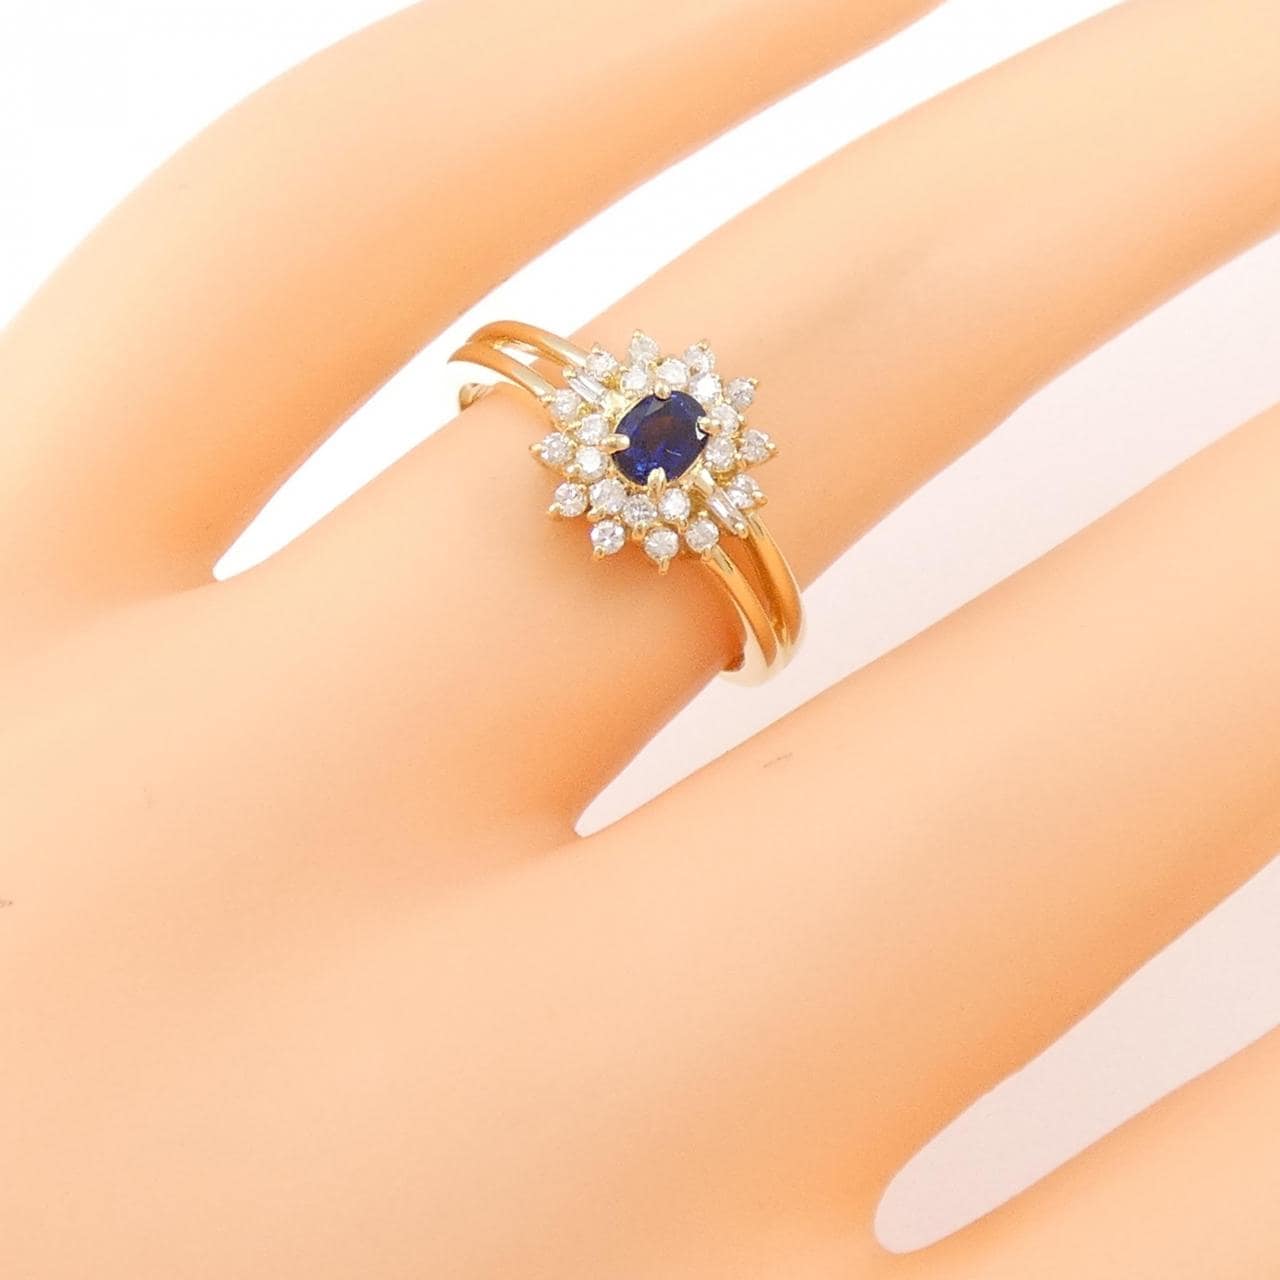 K18YG Sapphire Ring 0.23CT